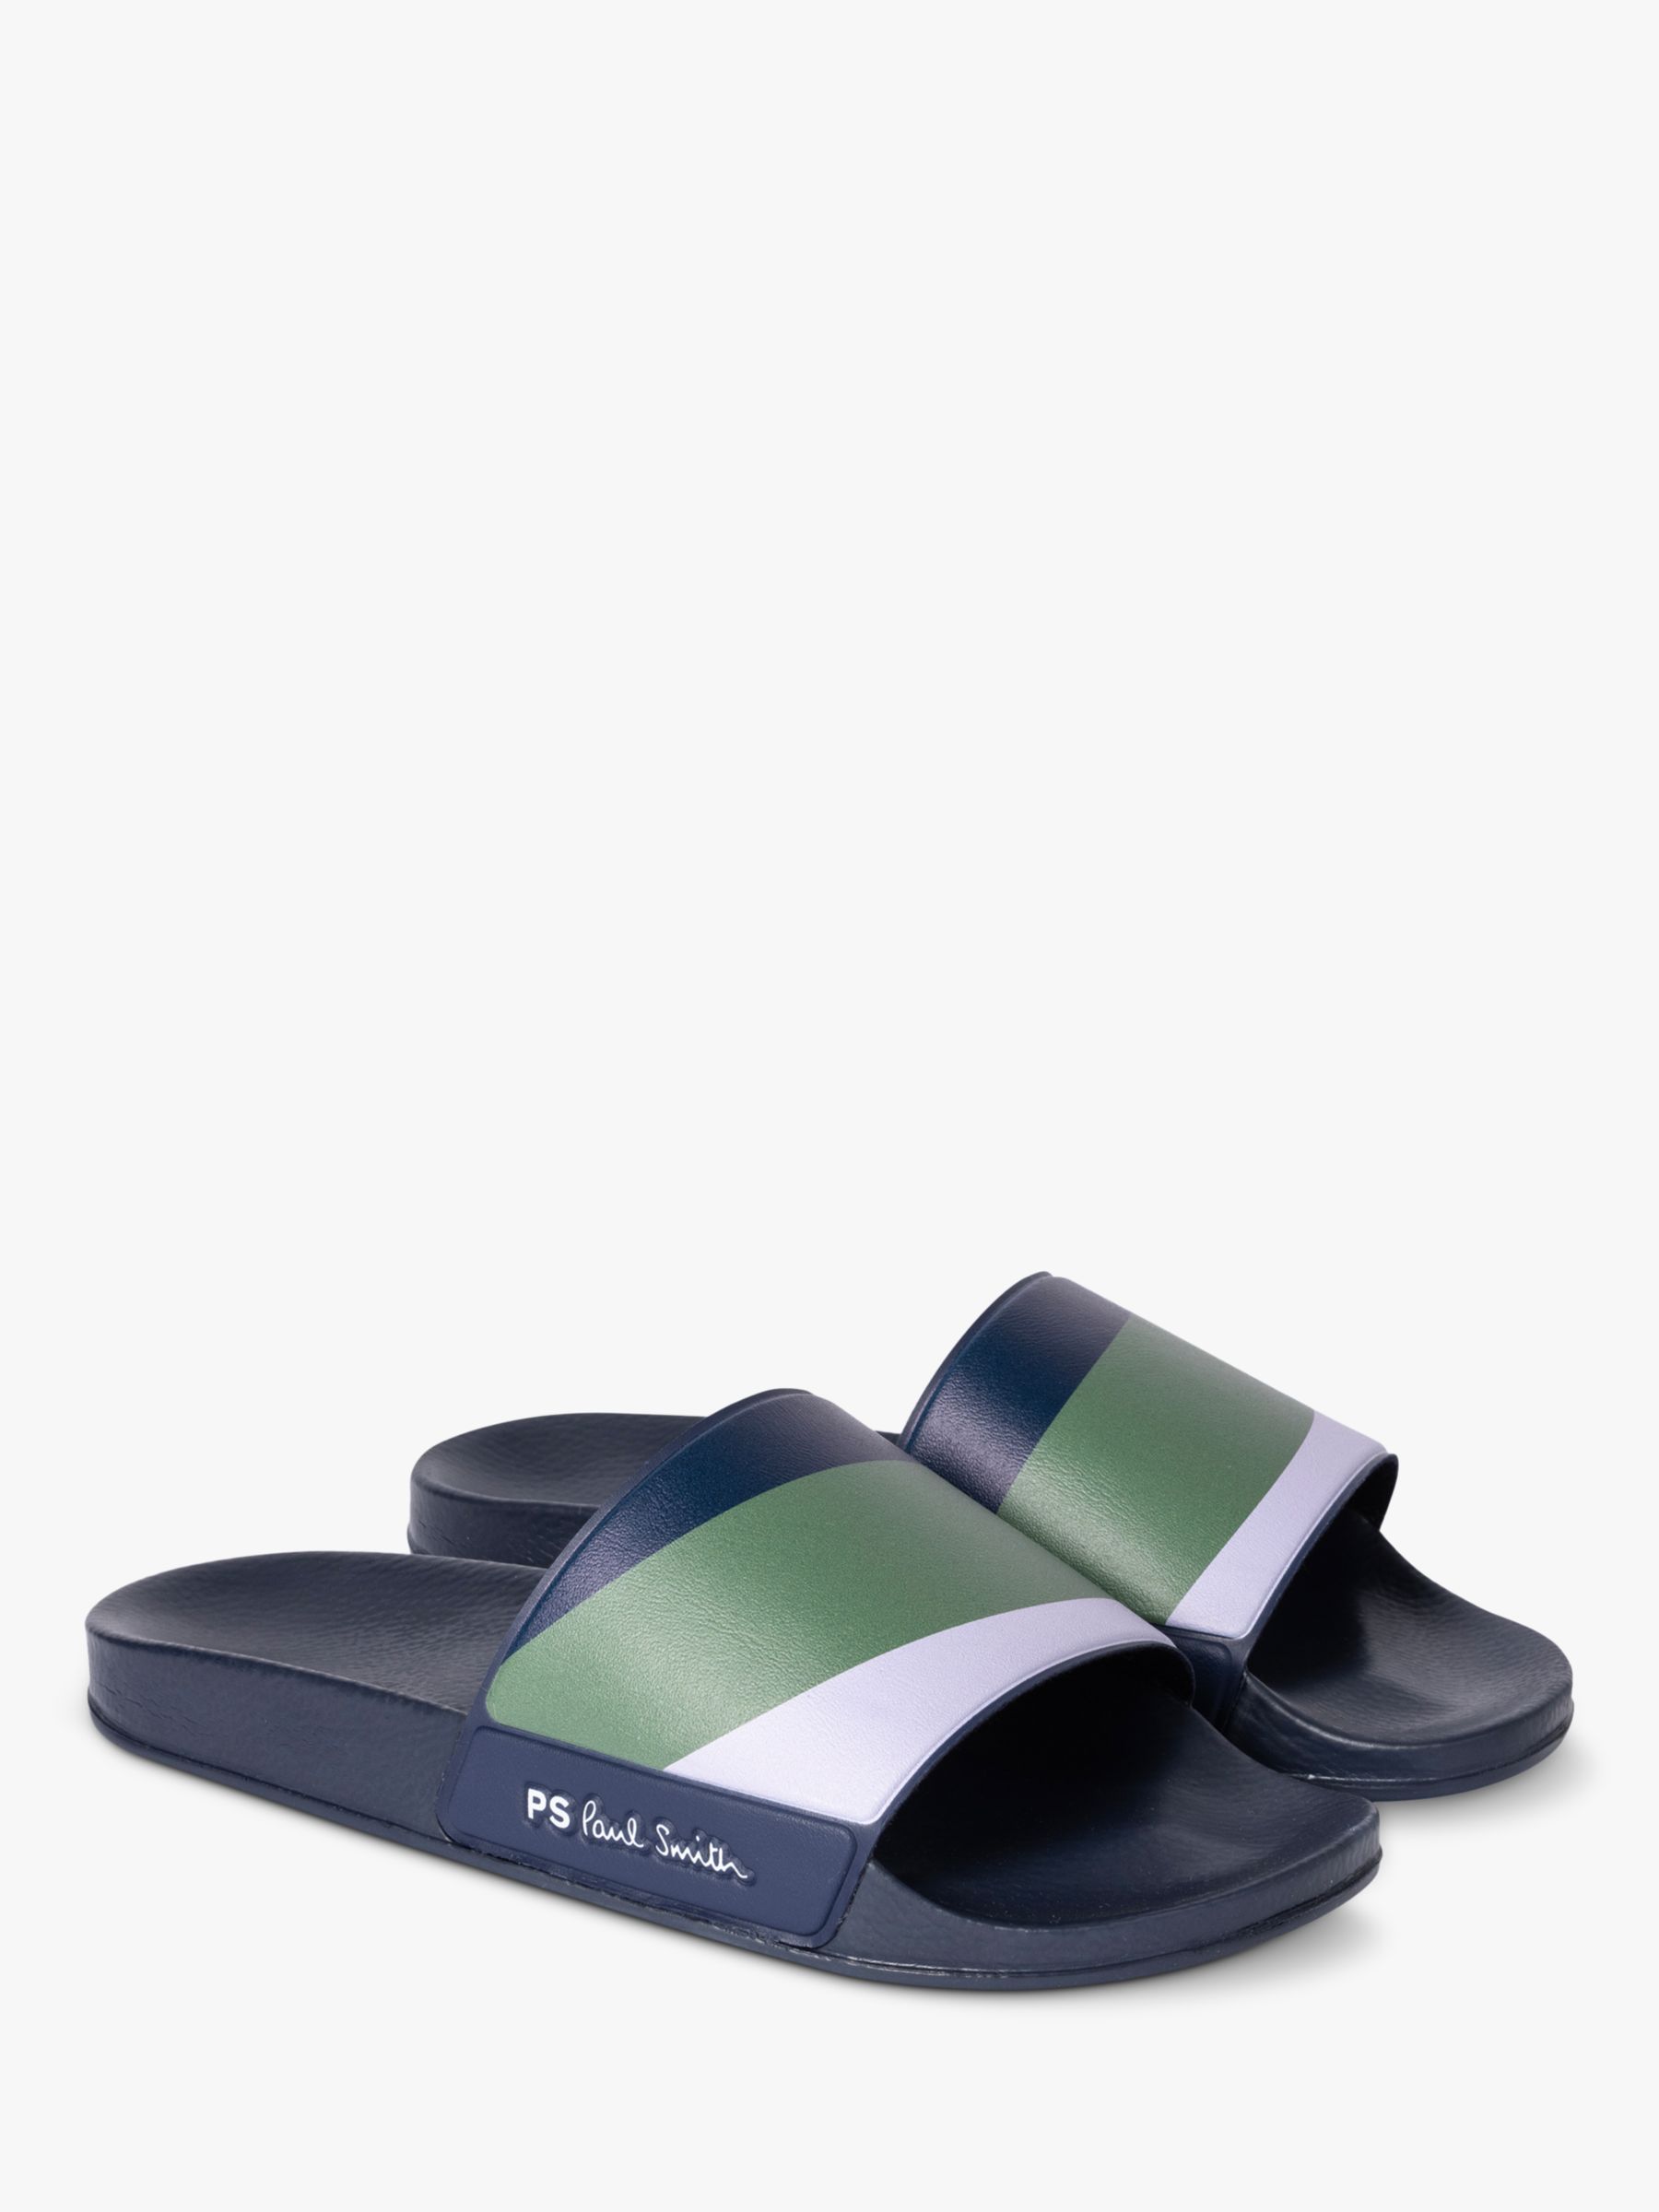 Paul Smith Nyro Slider Sandals, Navy/Multi, 7